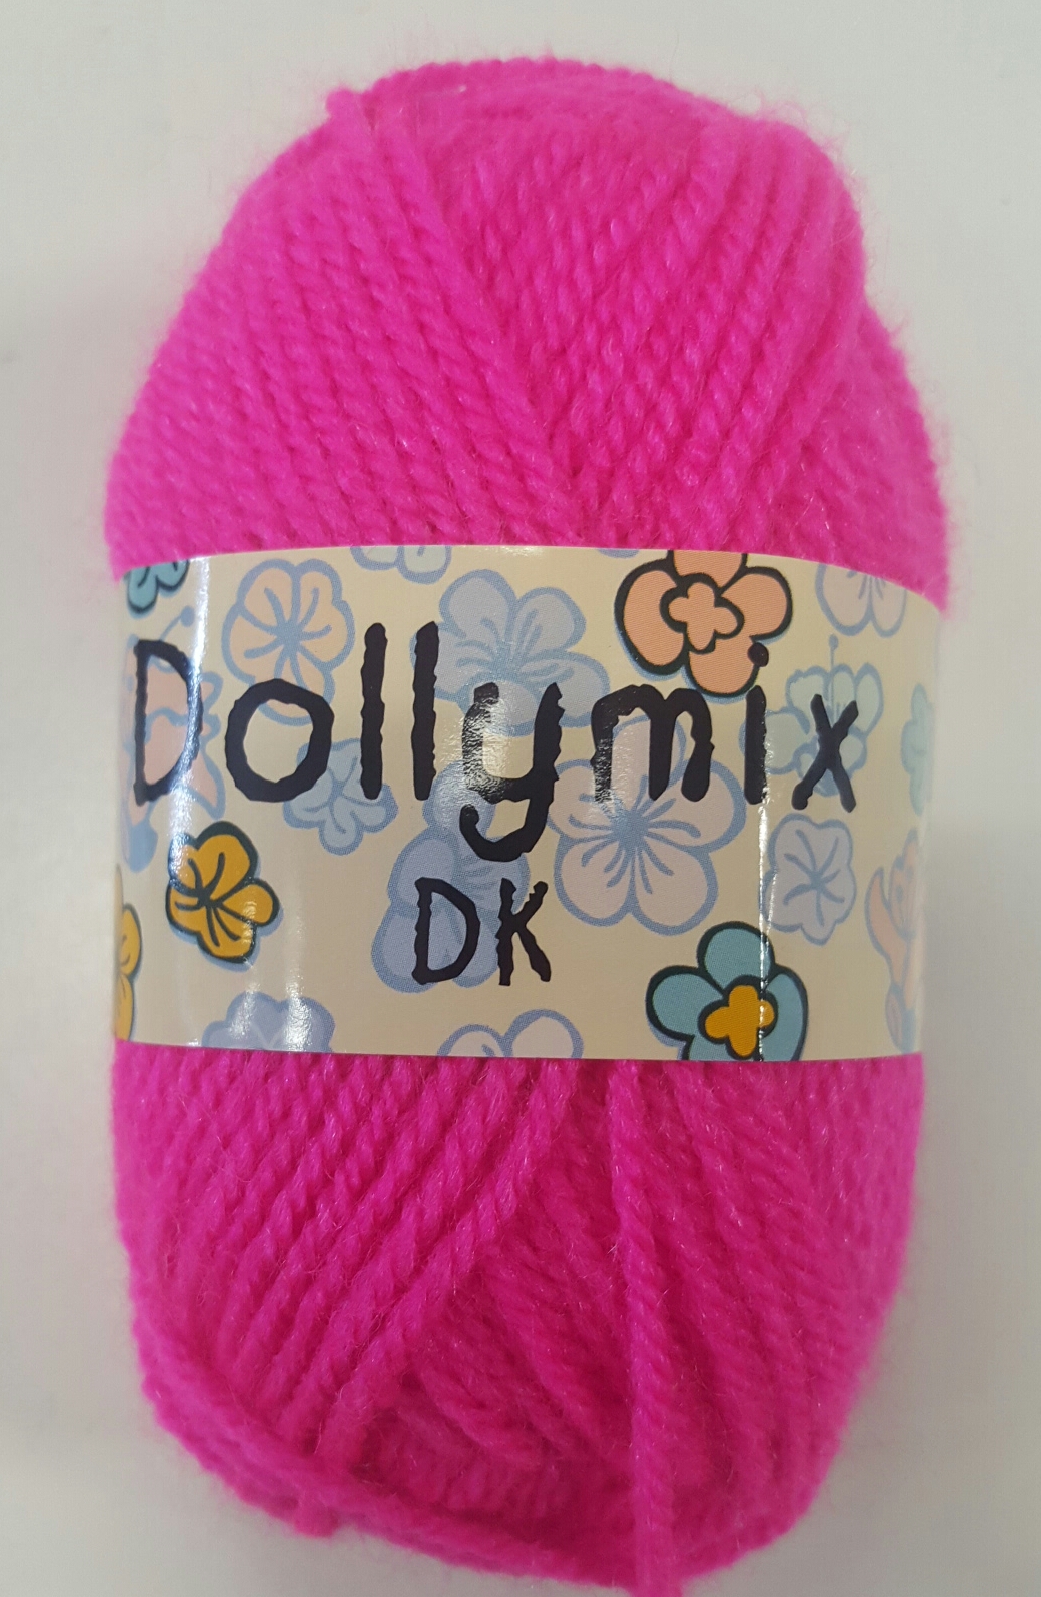 8 ply Dolly Mix